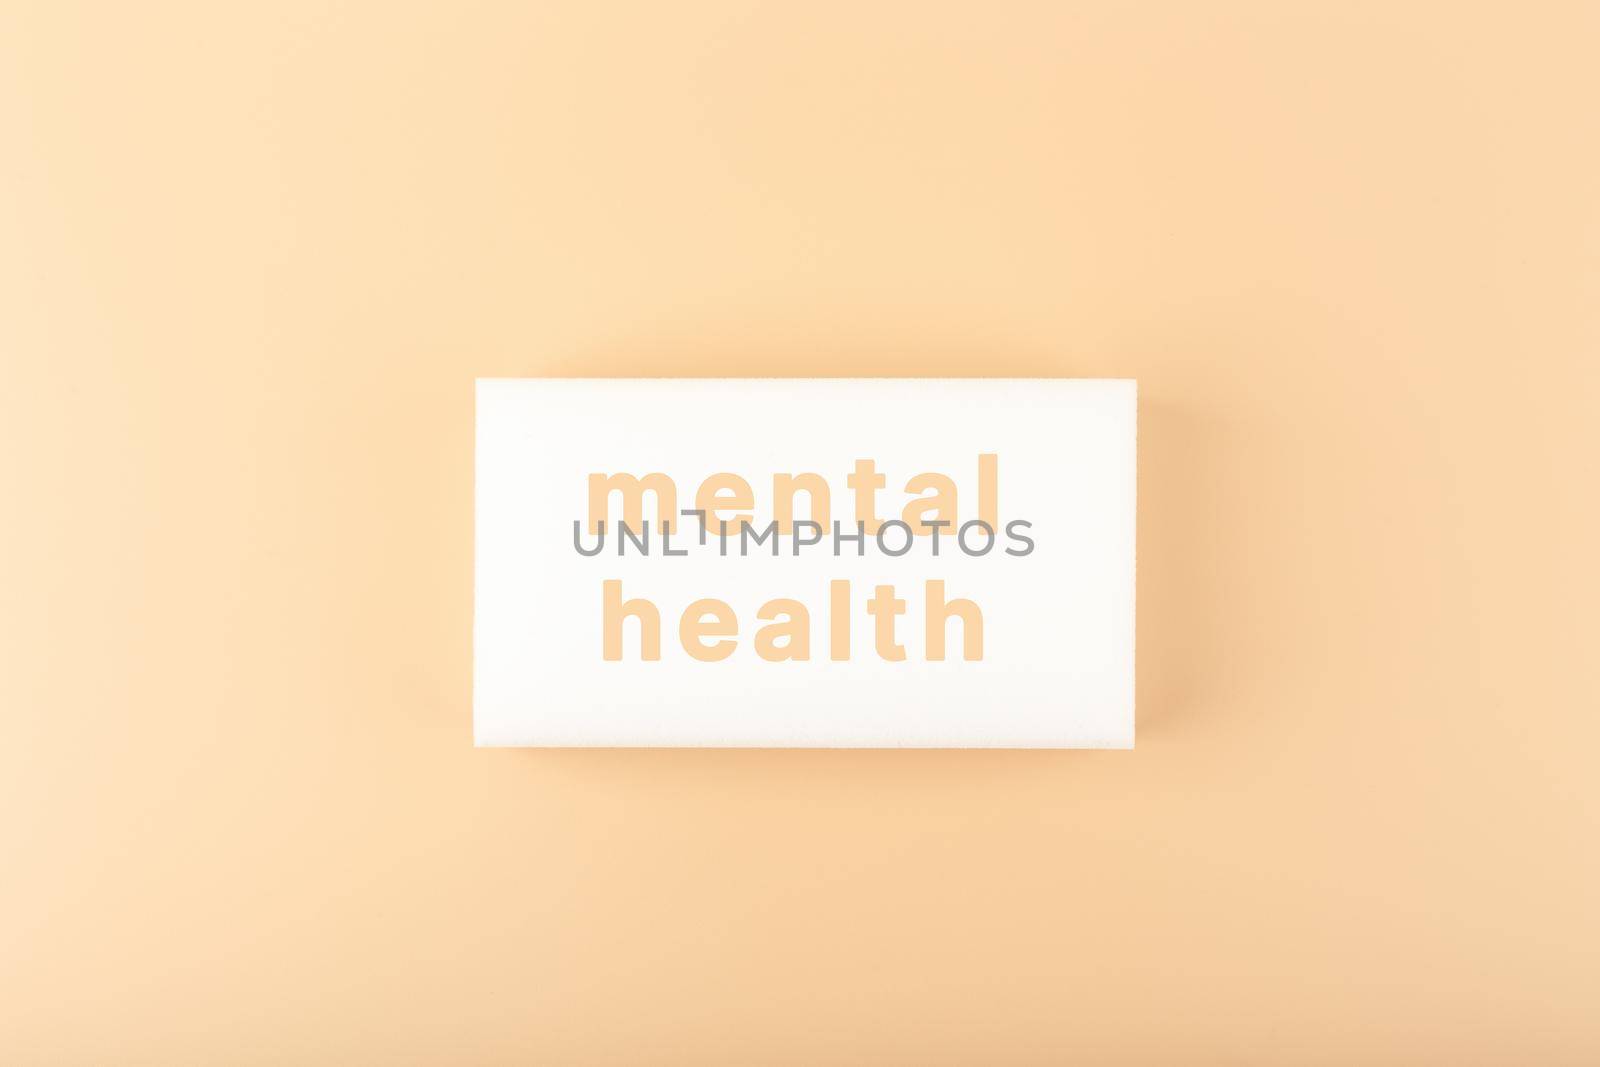 Mental health text written on white tablet on bright beige background by Senorina_Irina